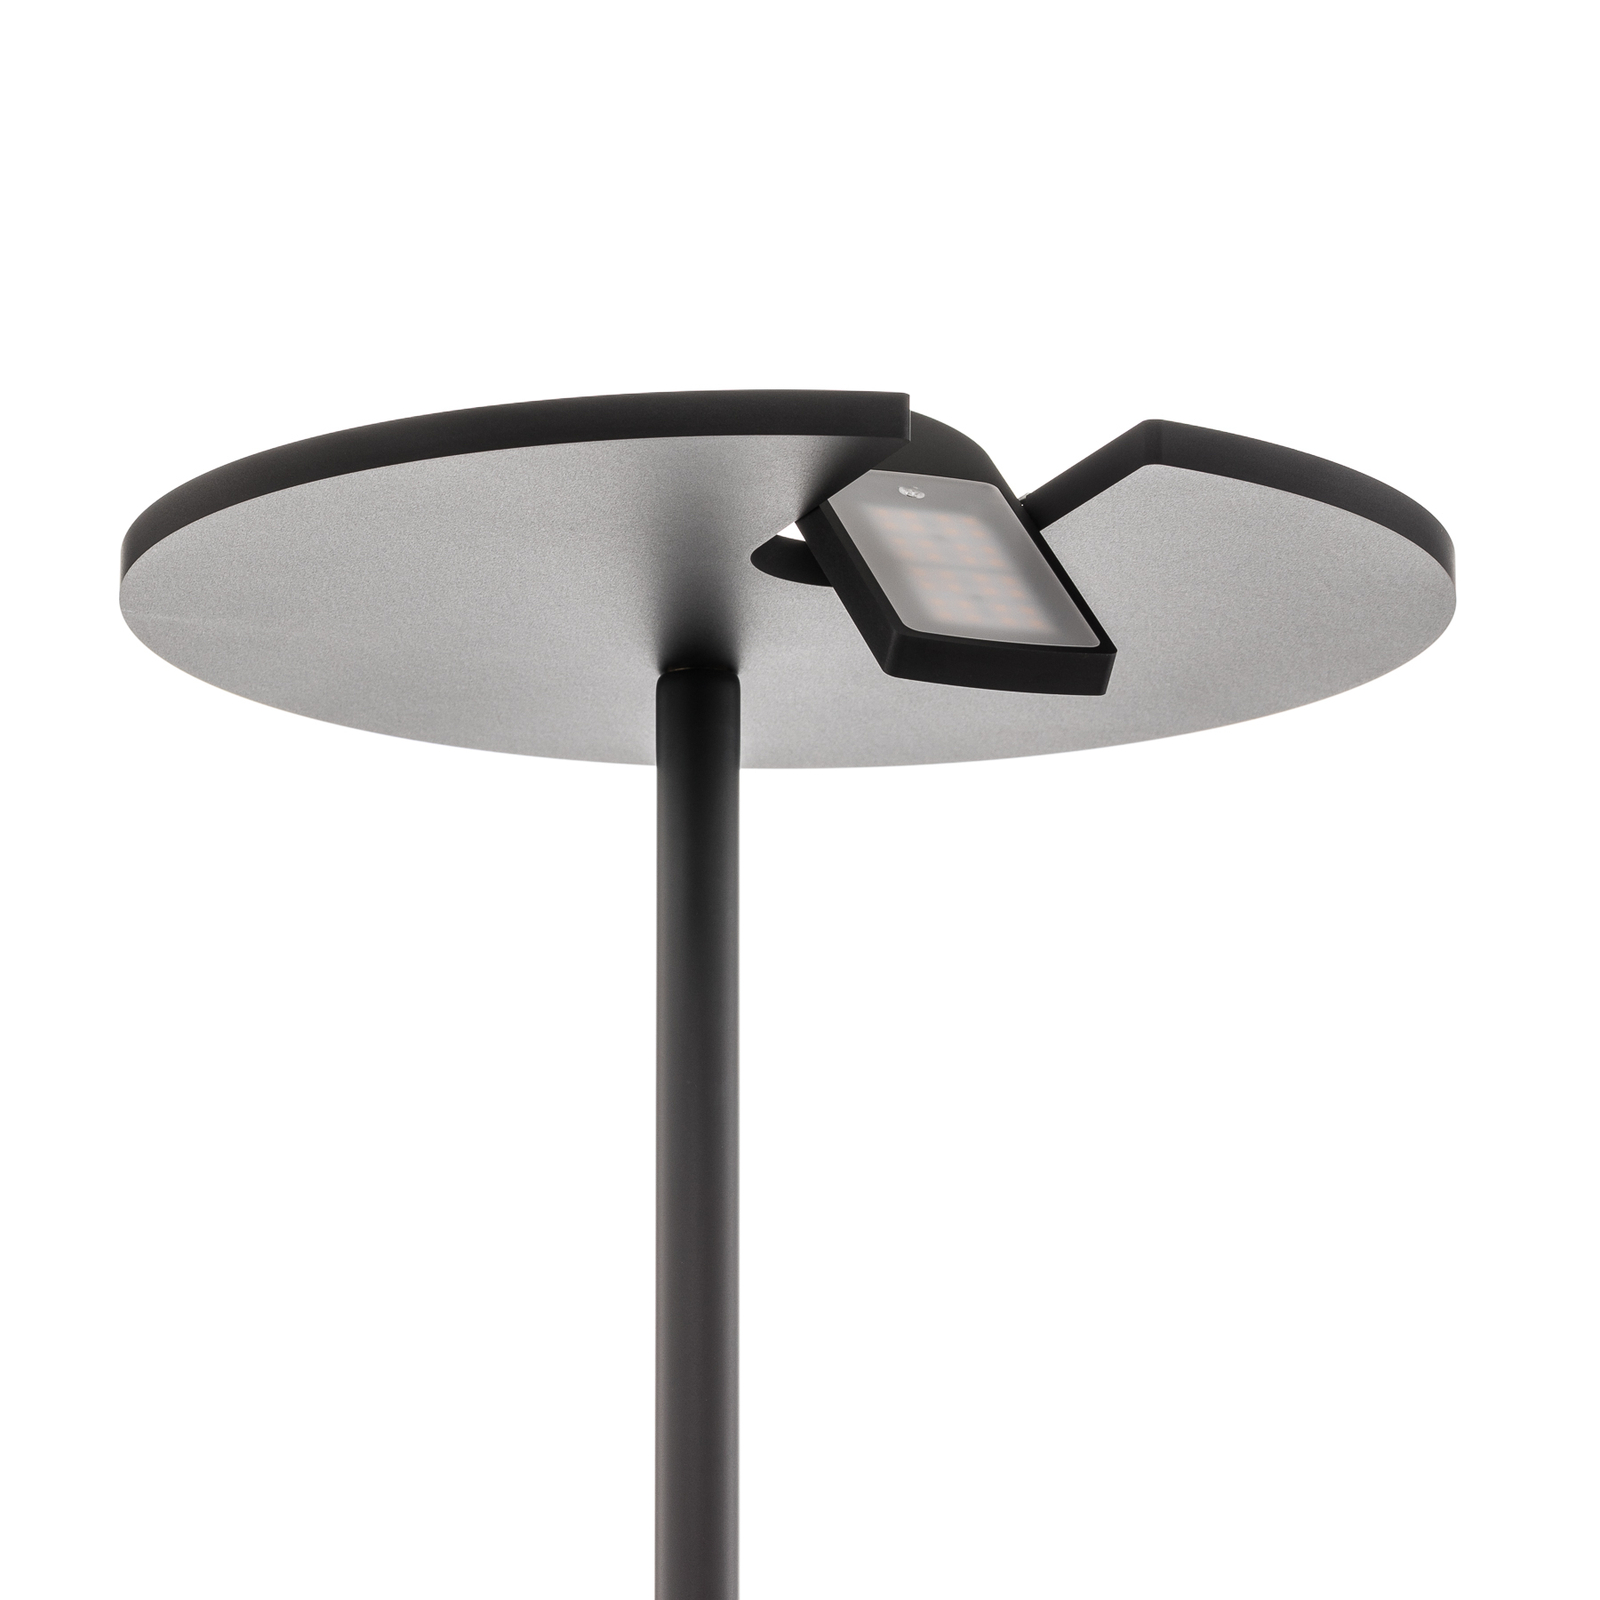 Stropné svietidlo Bopp Share LED s lampou na čítanie, čierne